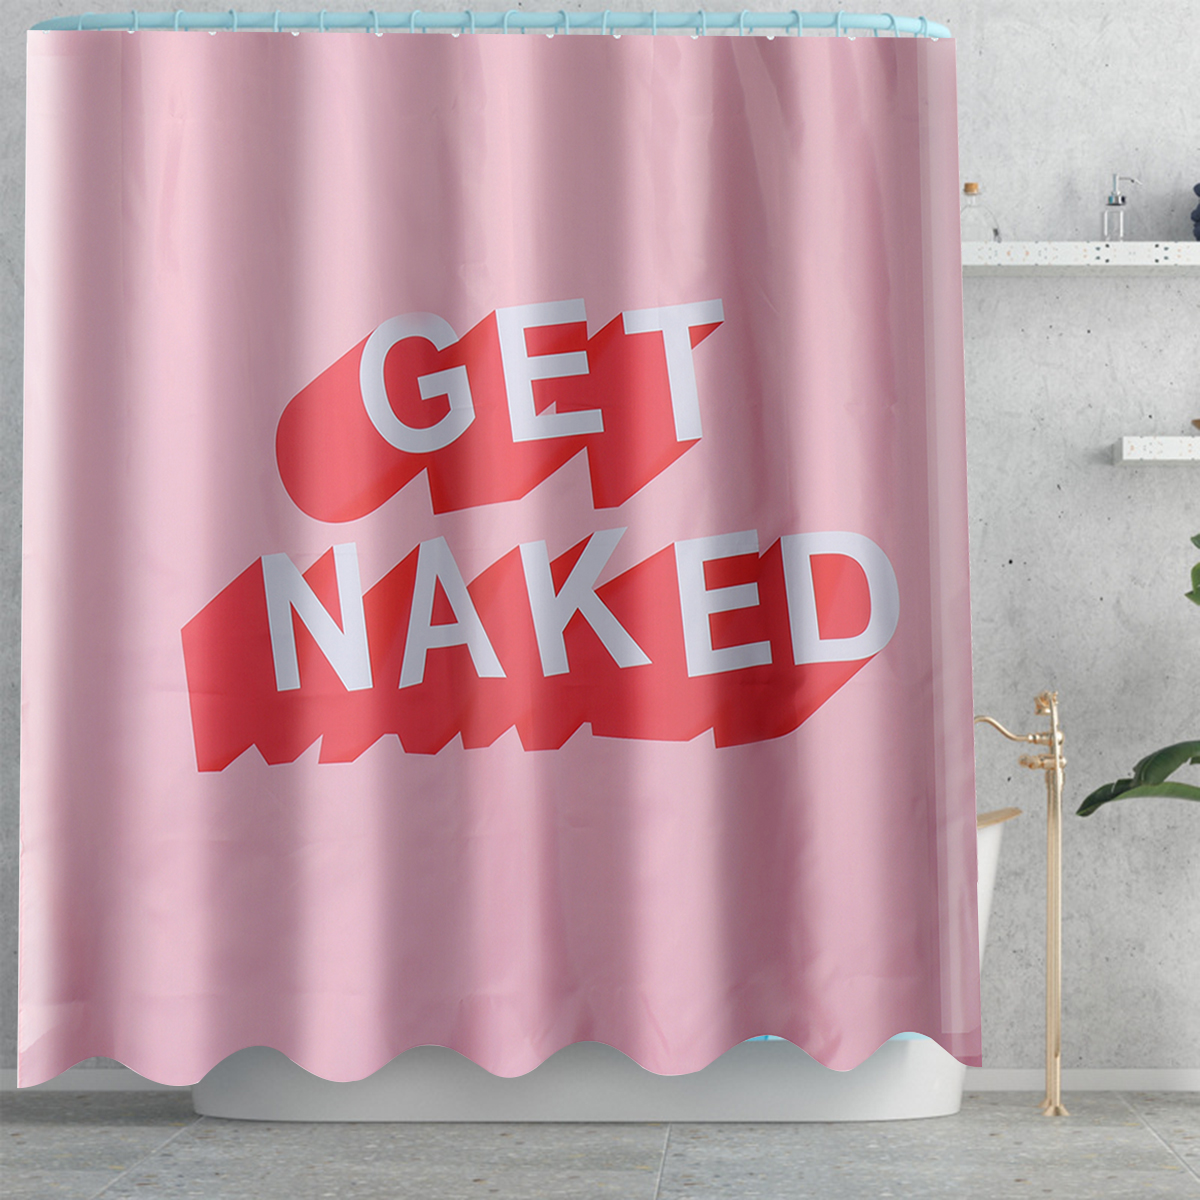 Shower-Curtain-Set-Bathroom-Non-Slip-Toilet-Mat-Cover-Rug-Pink-1800120-4